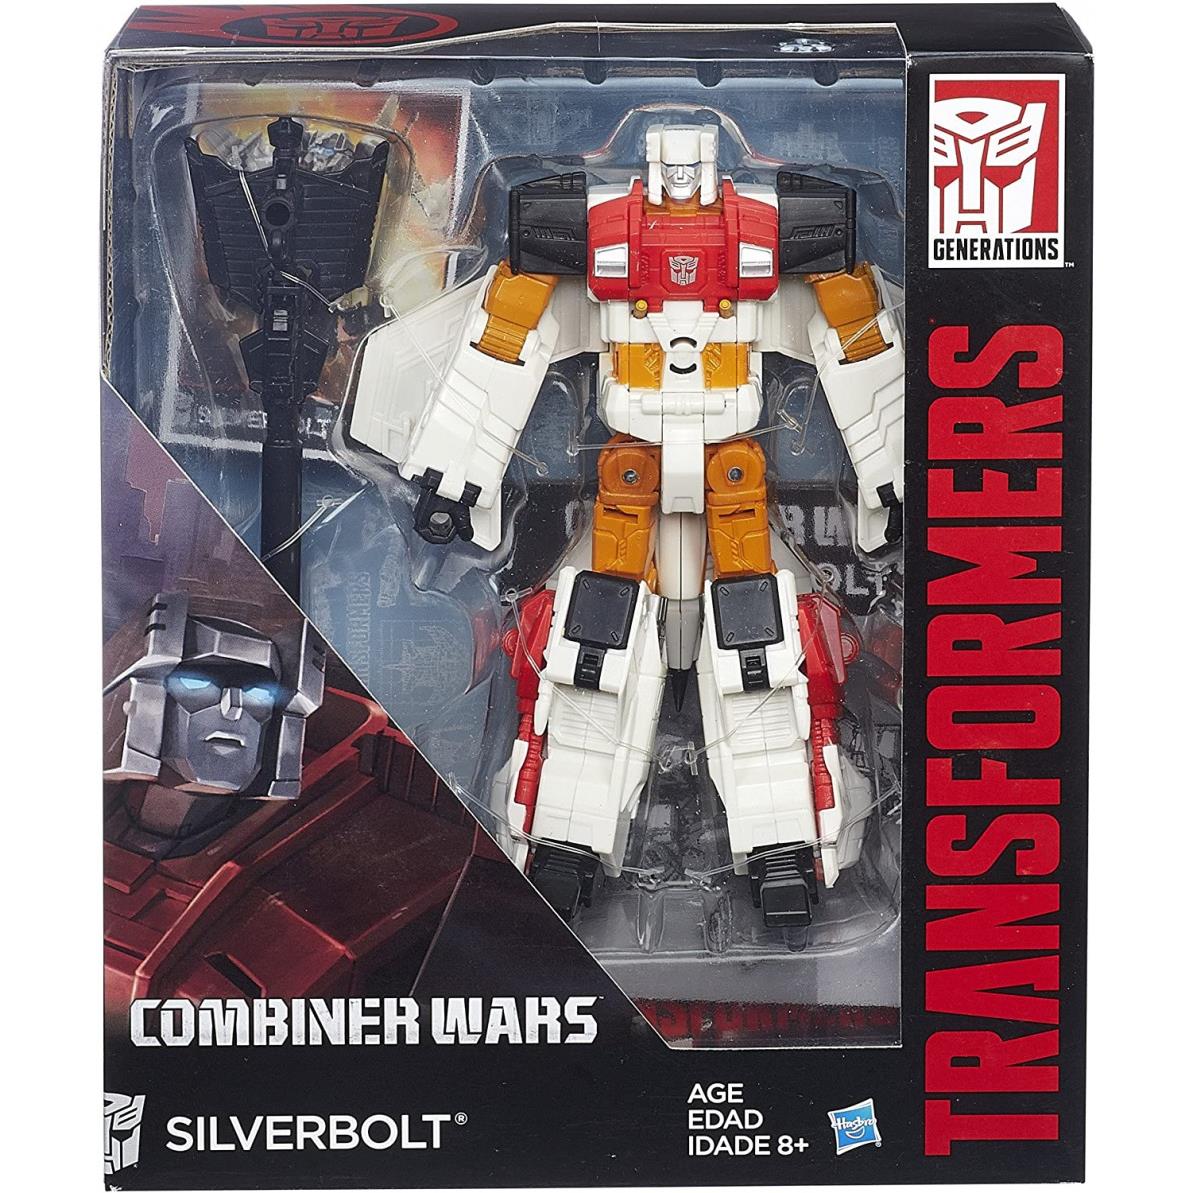 Transformers Generations Combiner Wars Voyager Class Silverbolt Figure